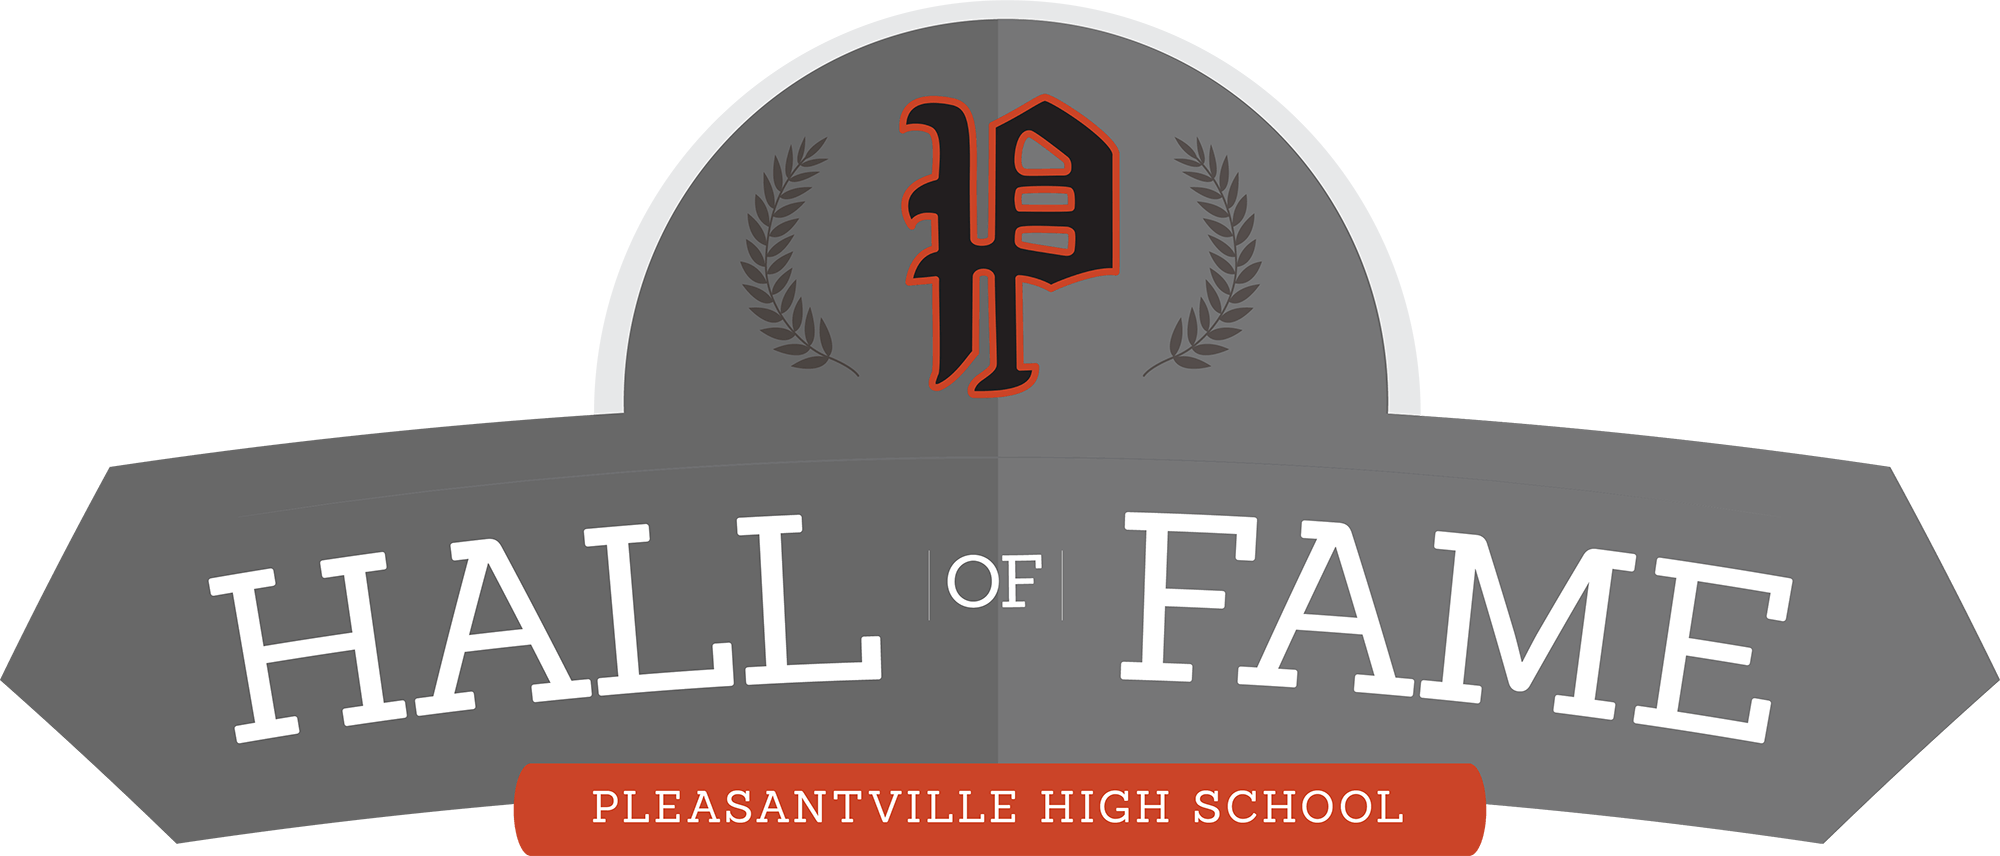 Pleasantville Schools Hall of Fame